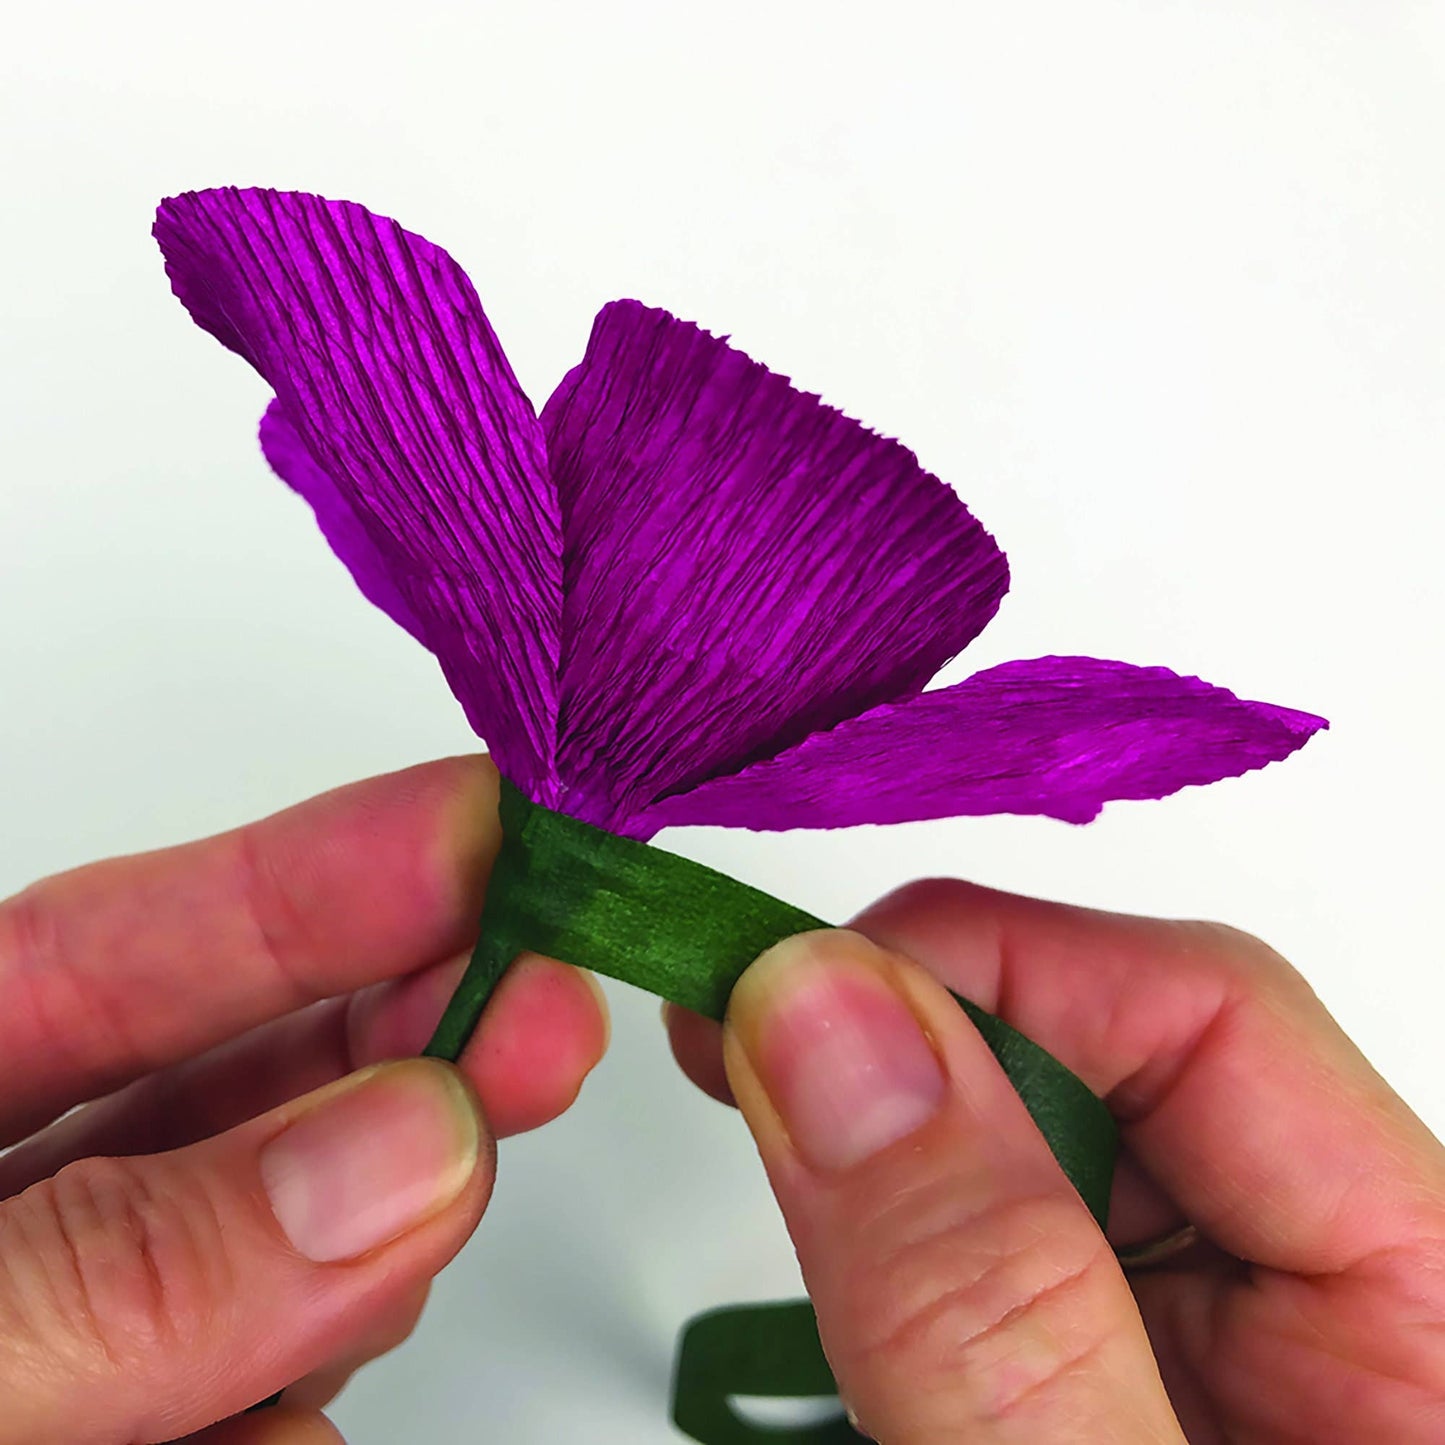 Paper Flower Kit - Anemone